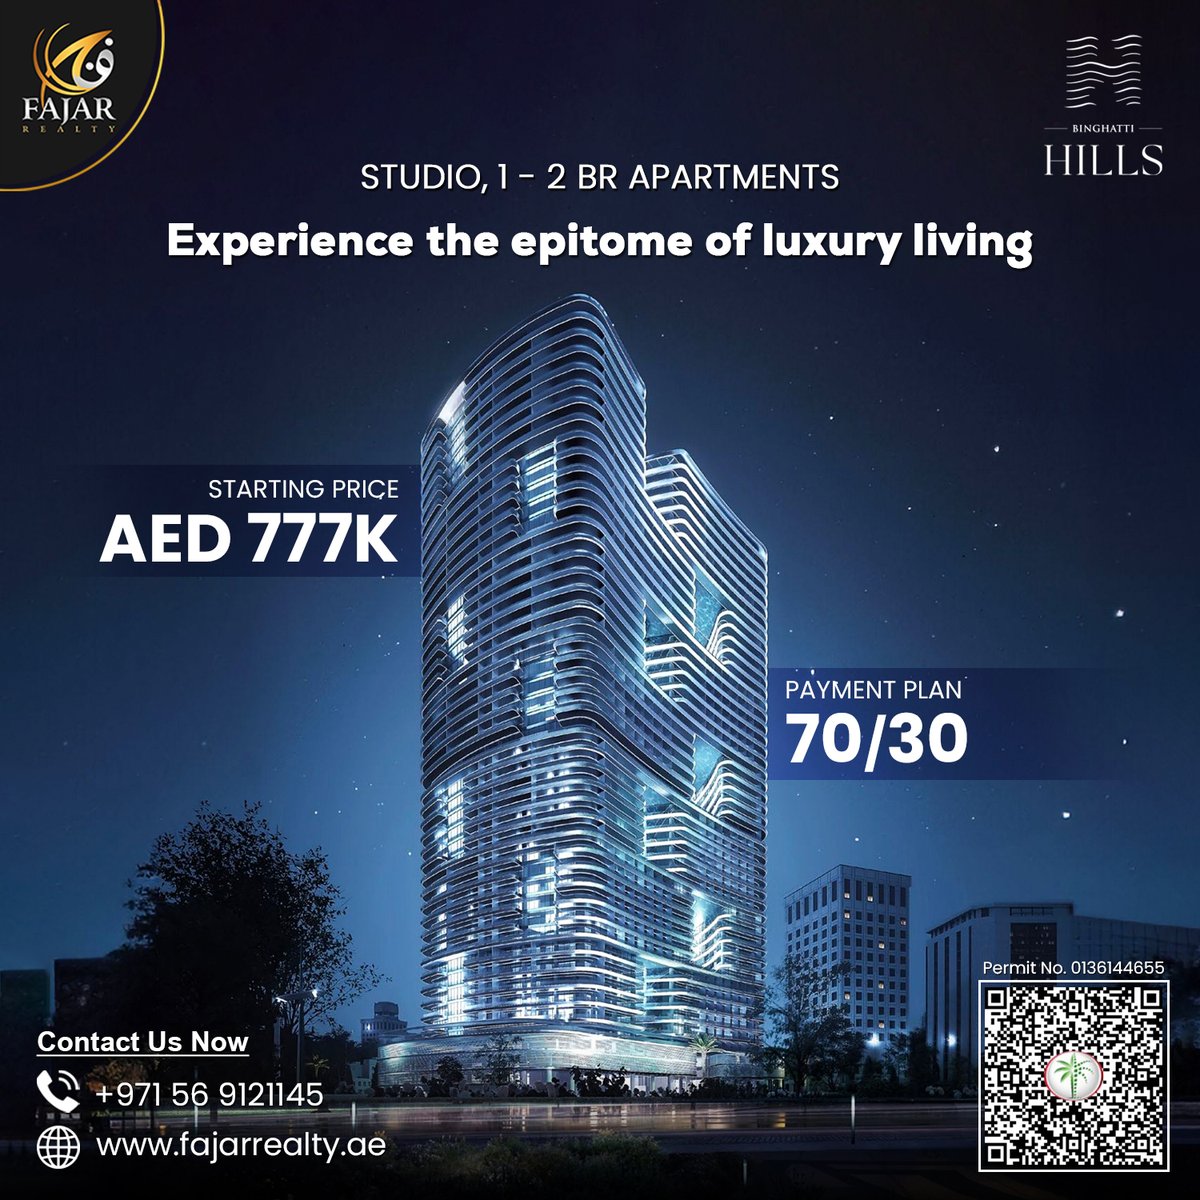 𝐁𝐢𝐧𝐠𝐡𝐚𝐭𝐭𝐢 𝐇𝐢𝐥𝐥𝐬 𝐚𝐭 𝐃𝐮𝐛𝐚𝐢 𝐒𝐜𝐢𝐞𝐧𝐜𝐞 𝐏𝐚𝐫𝐤🇦🇪✨

𝗣𝗿𝗼𝗷𝗲𝗰𝘁 𝗛𝗶𝗴𝗵𝗹𝗶𝗴𝗵𝘁𝘀  💥
✅ Exclusive Studio, 1 & 2 Bed Apartments
✅ Starting Price From 𝐀𝐄𝐃 𝟕𝟕𝟕,𝟕𝟕𝟎
✅ World-class Amenities

Permit # 0136144655

#binghattihills #LuxuryLiving